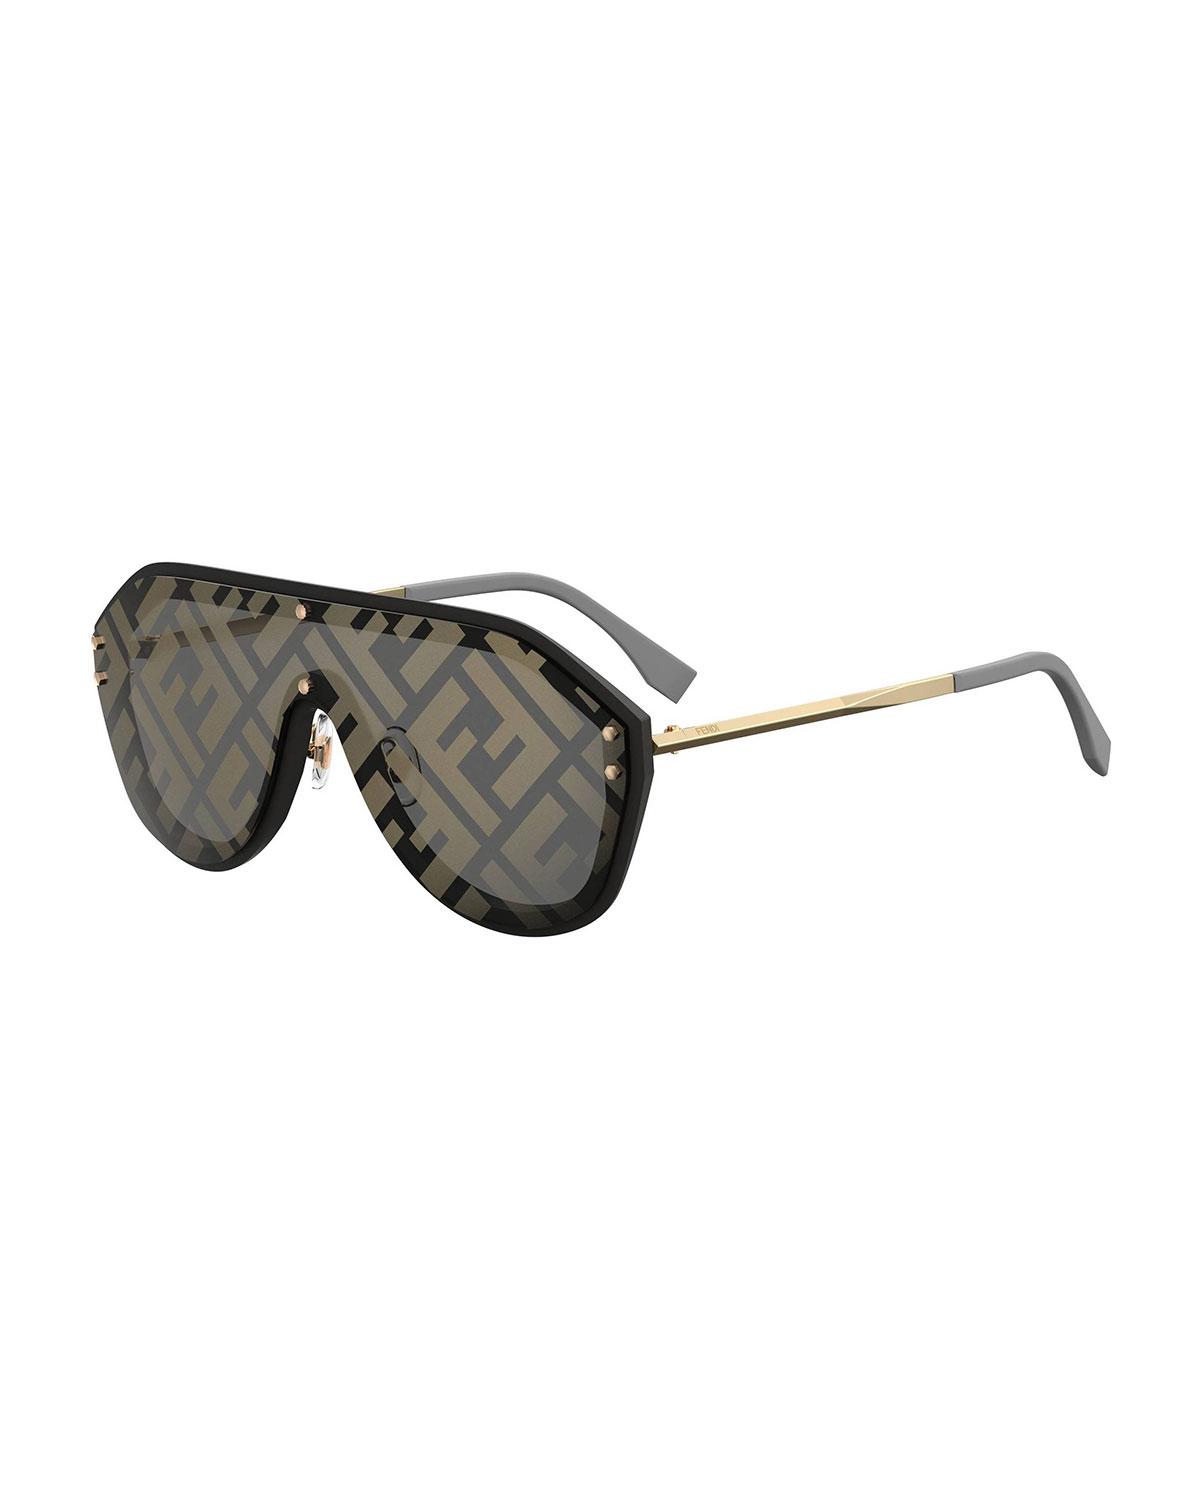 Fendi Ff Shield Sunglasses in Metallic - Lyst